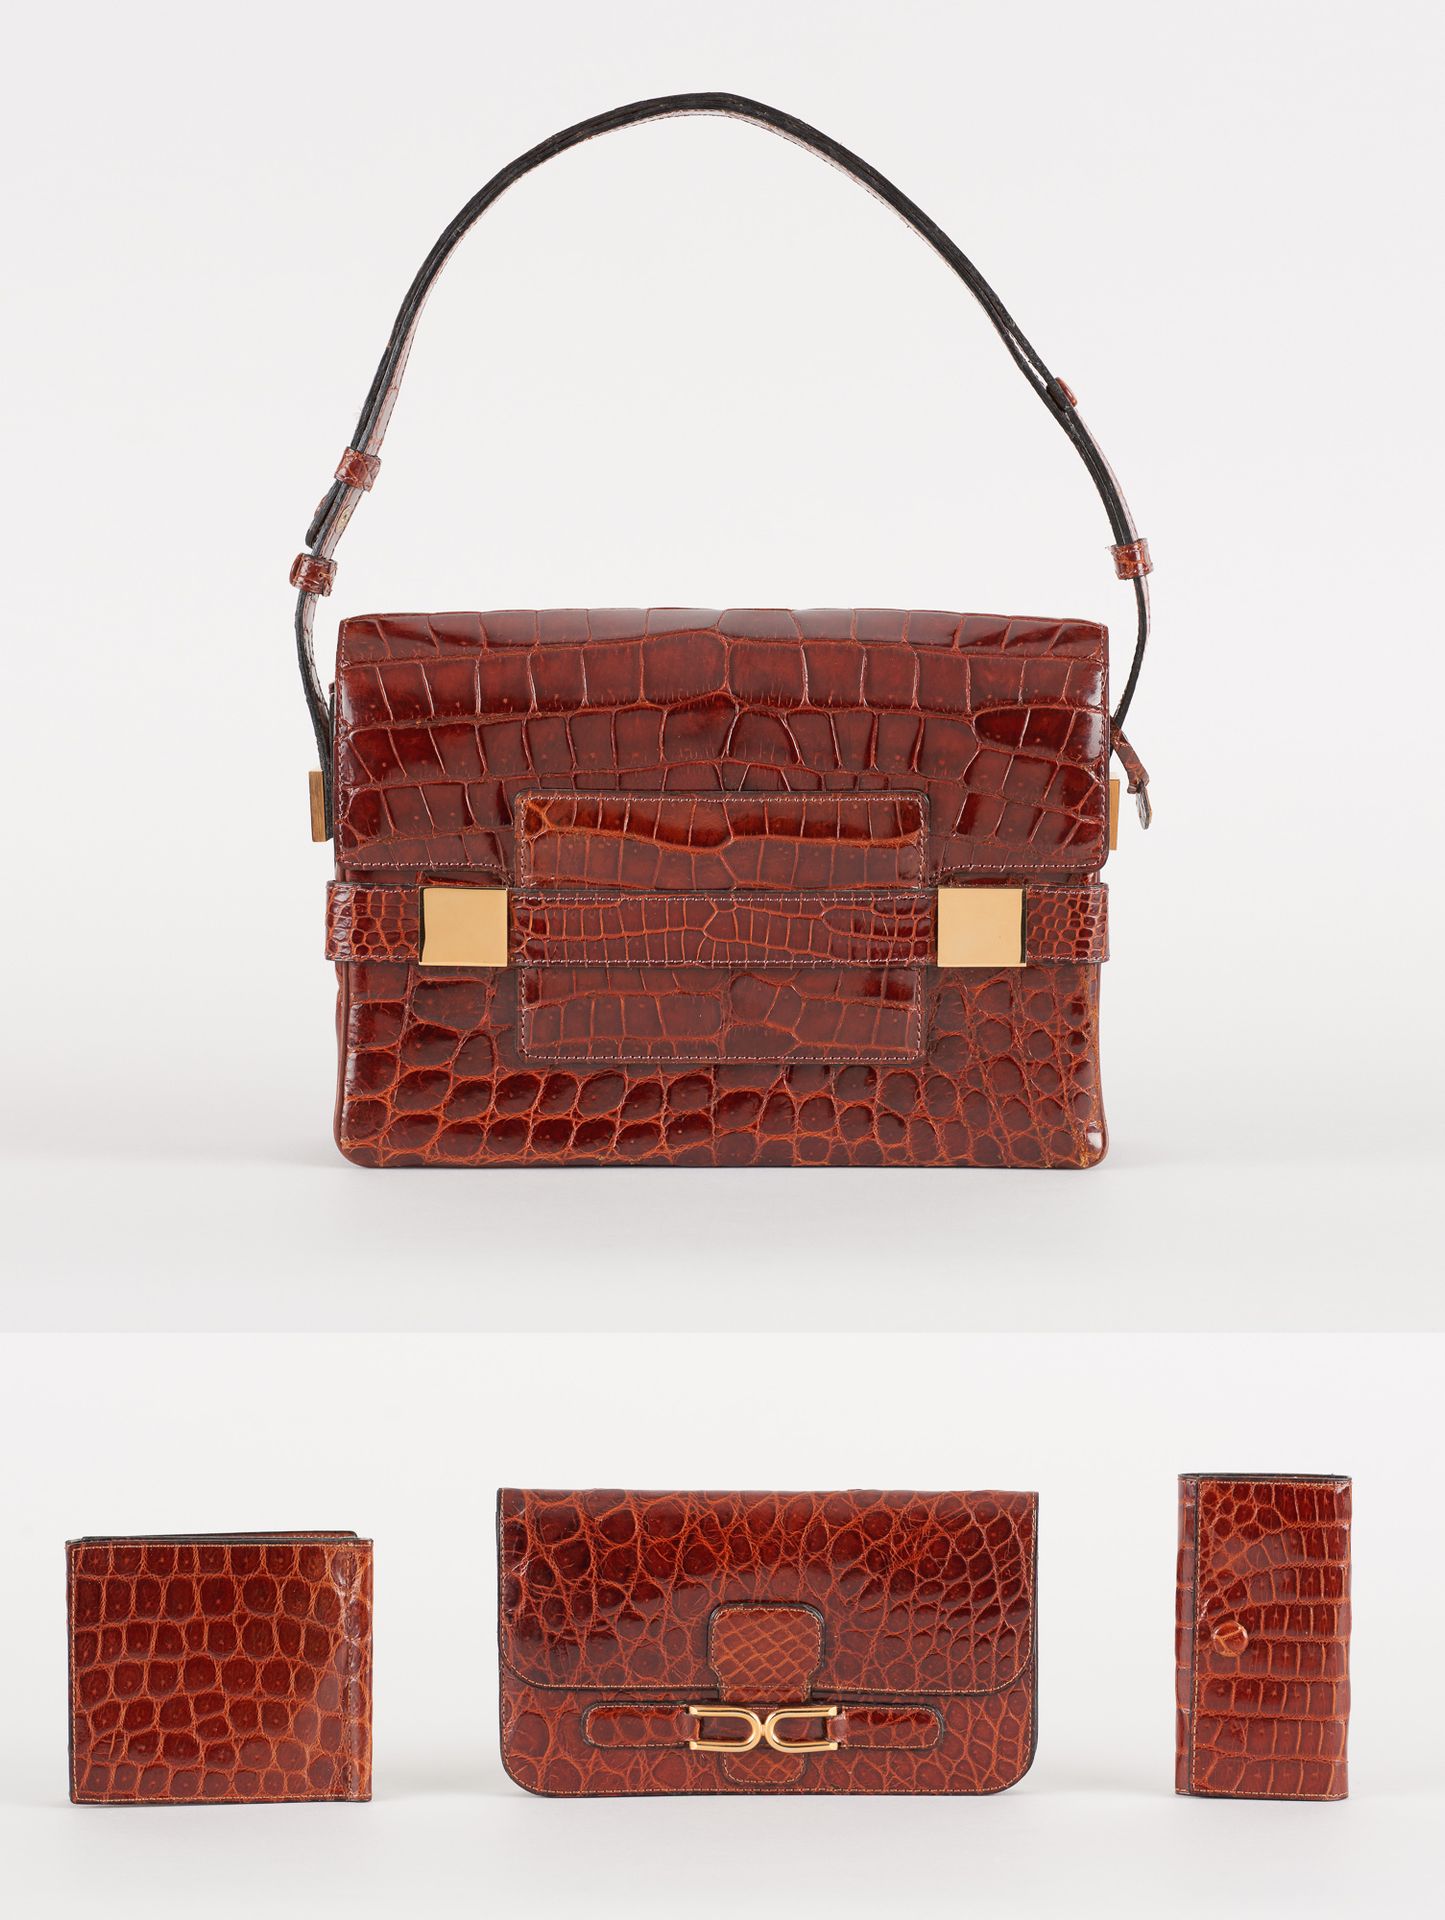 Delvaux. Leather goods: Brown crocodile skin handbag.

Delvaux brand, model "Mar&hellip;